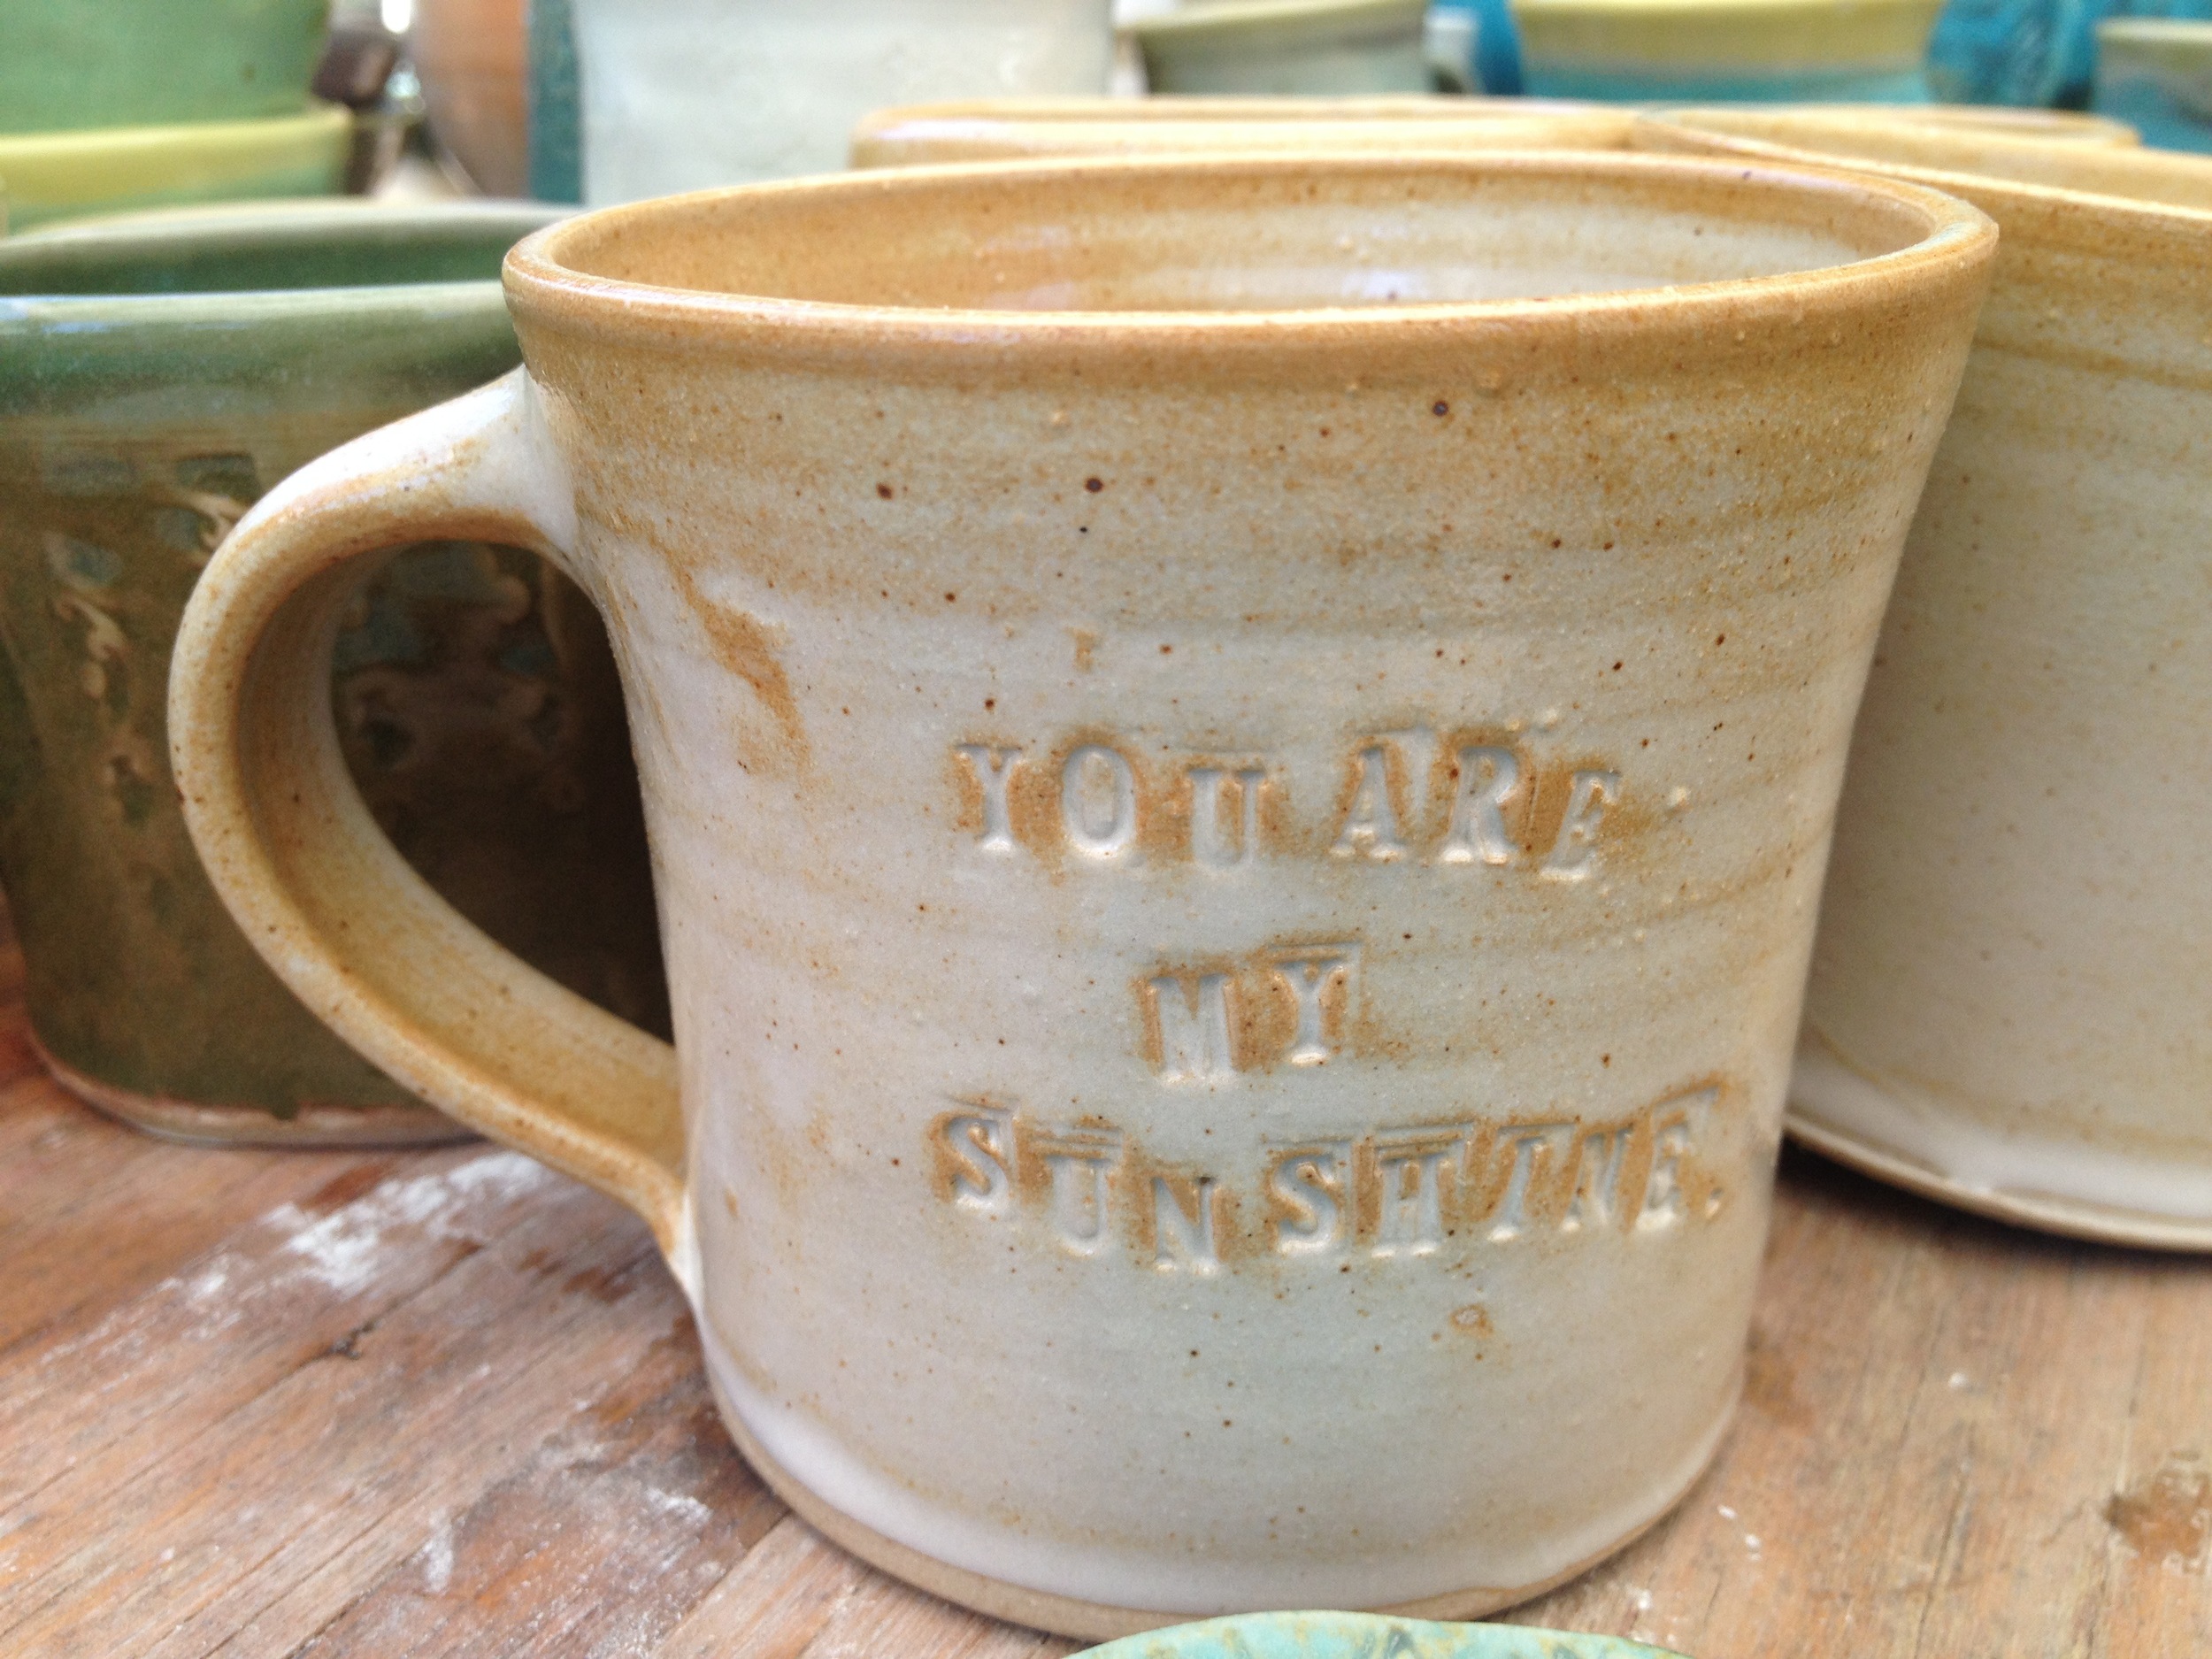 You are my sunshine mug